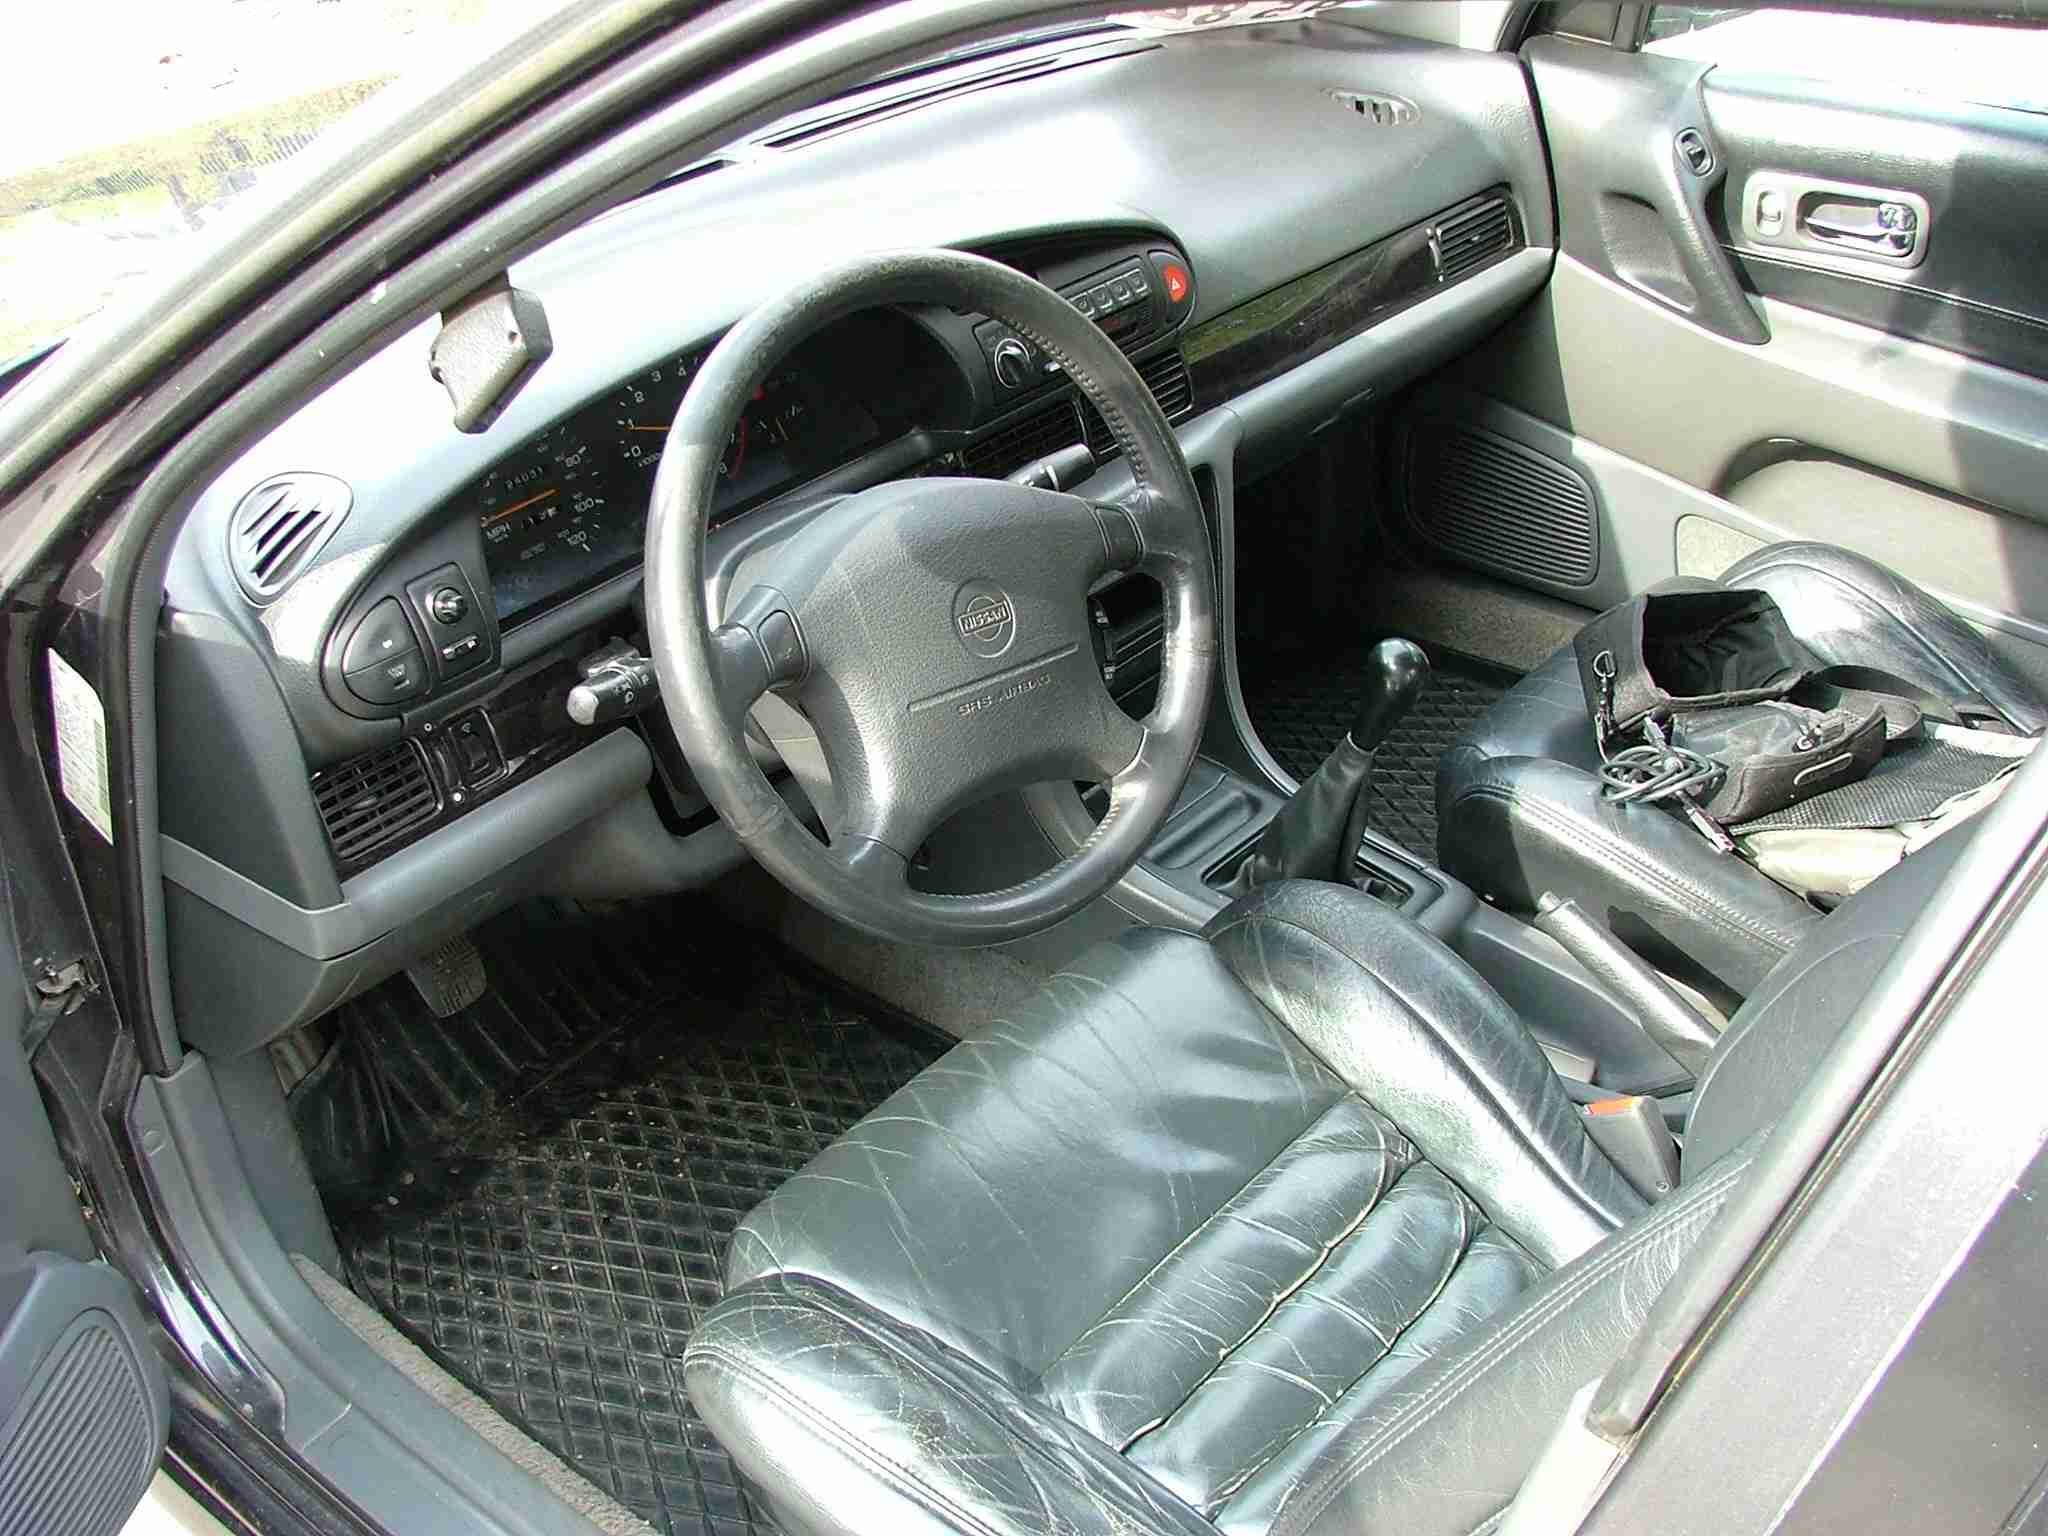 1993 Nissan Altima